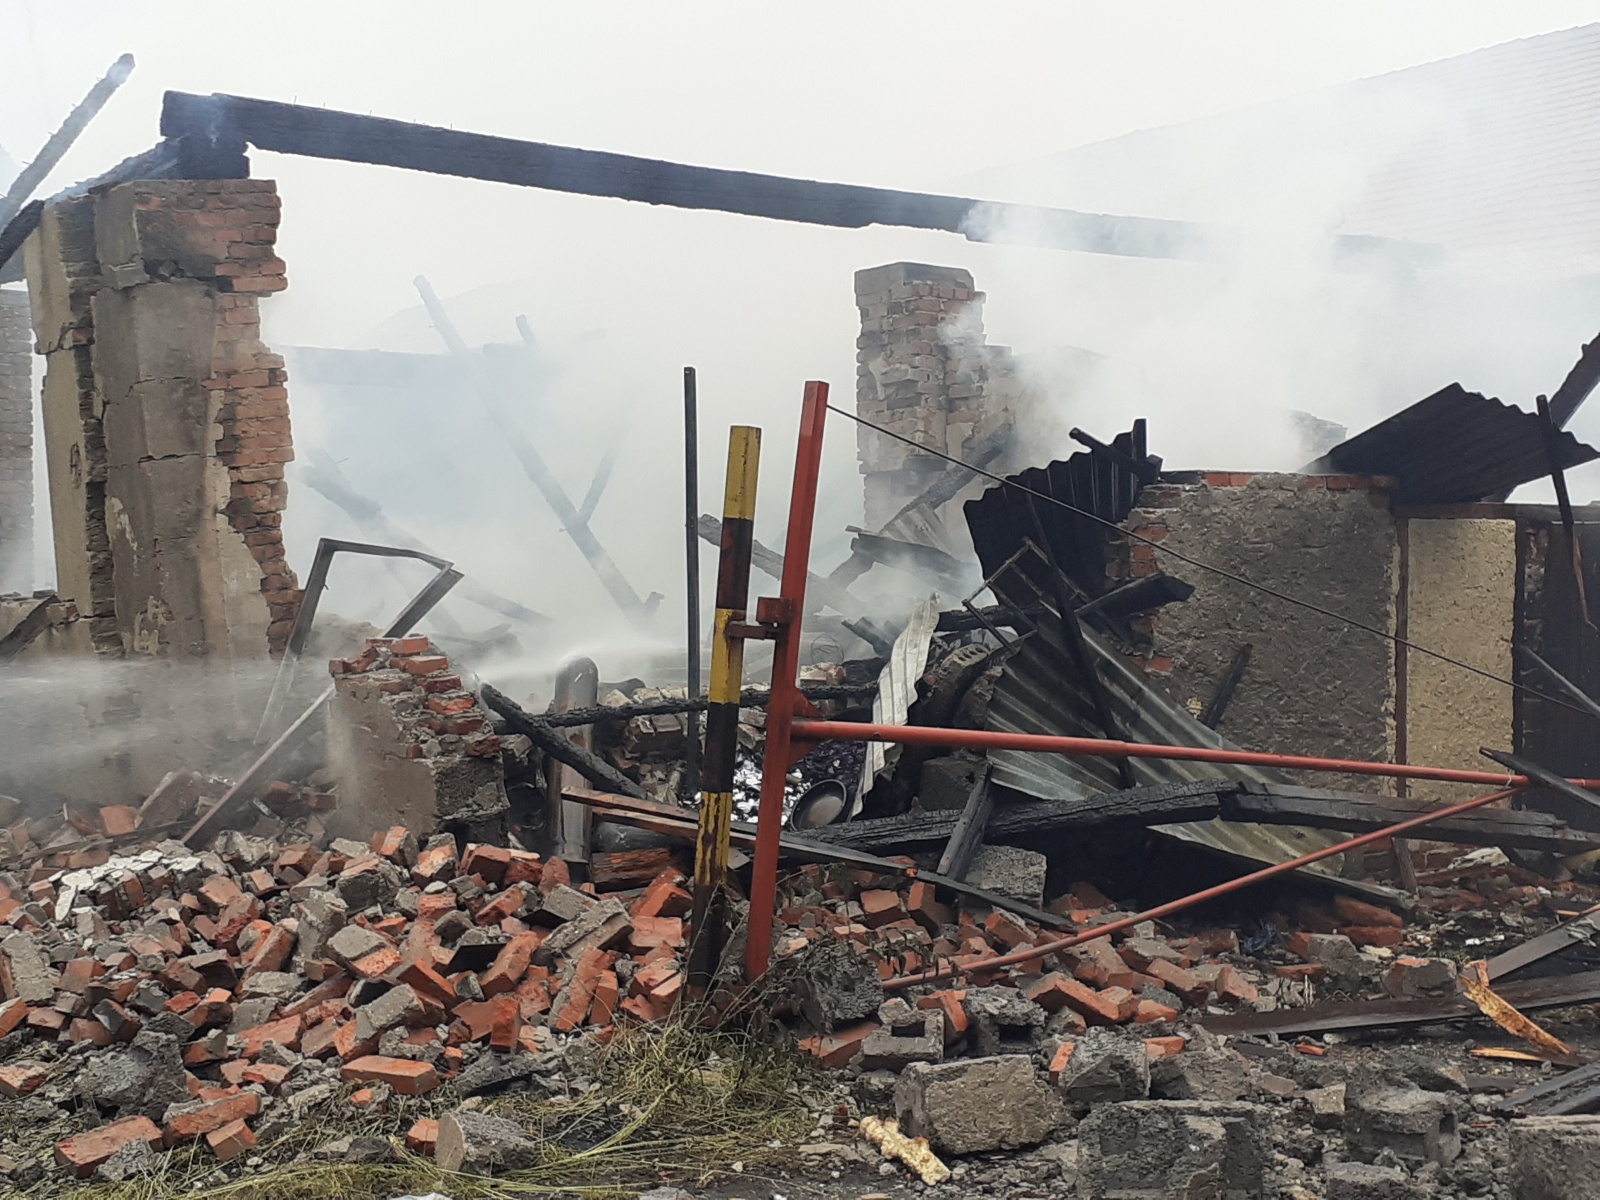 009-Požár výrobny pyrotechniky v obci Praskolesy na Berounsku.jpg